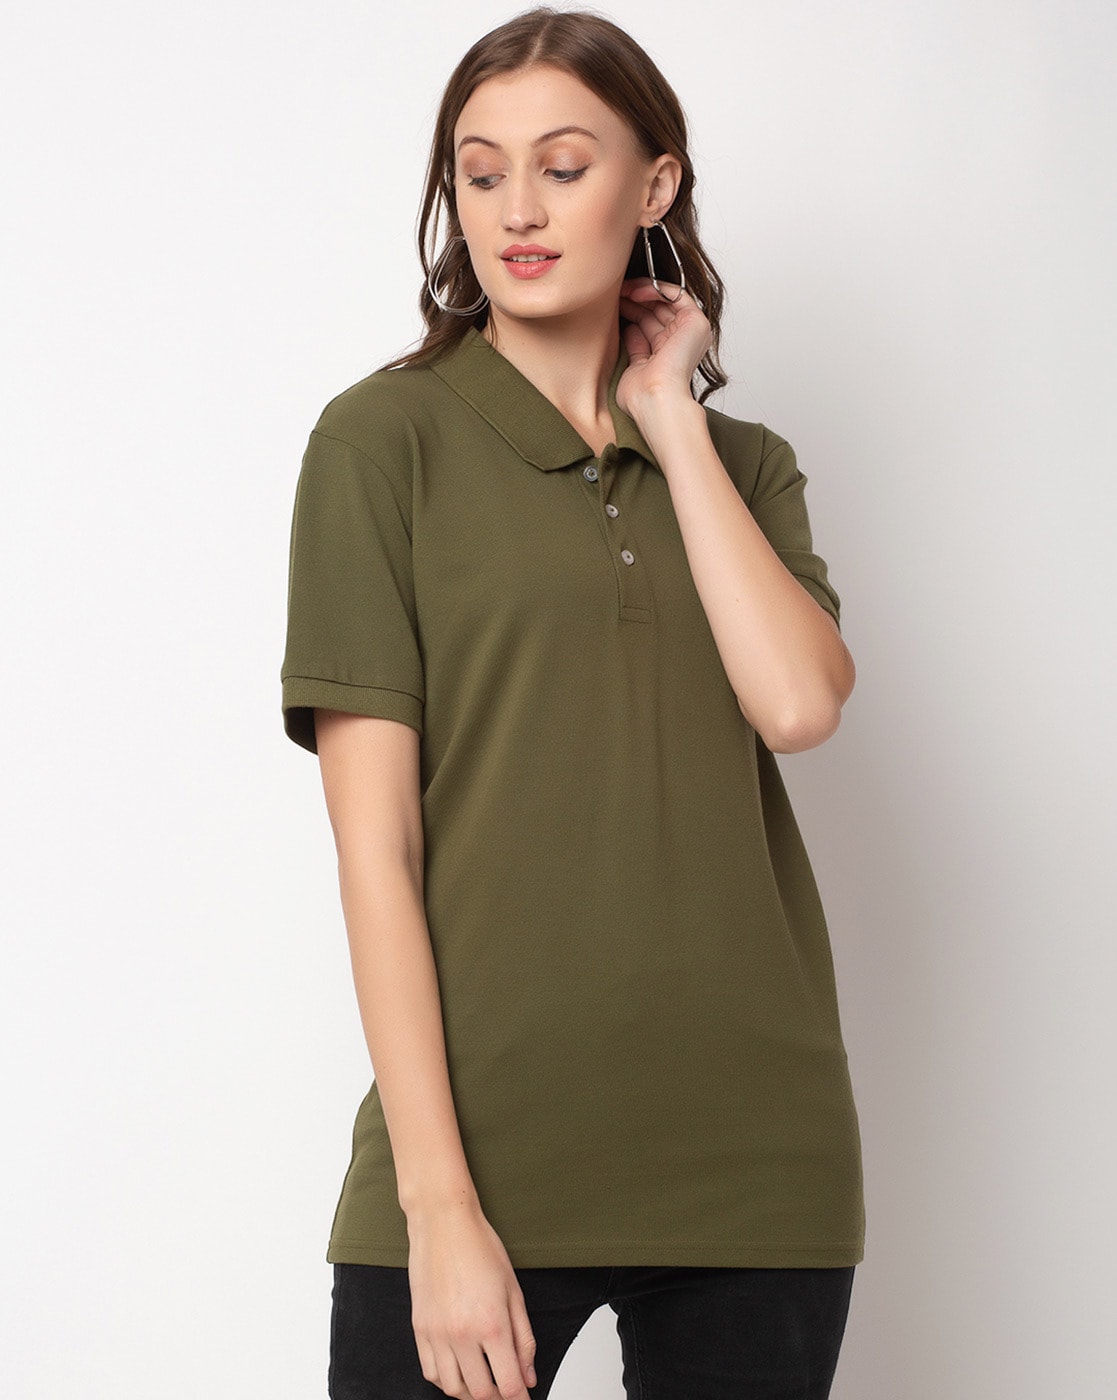 Women's plain olive green t shirt, T shirts for women